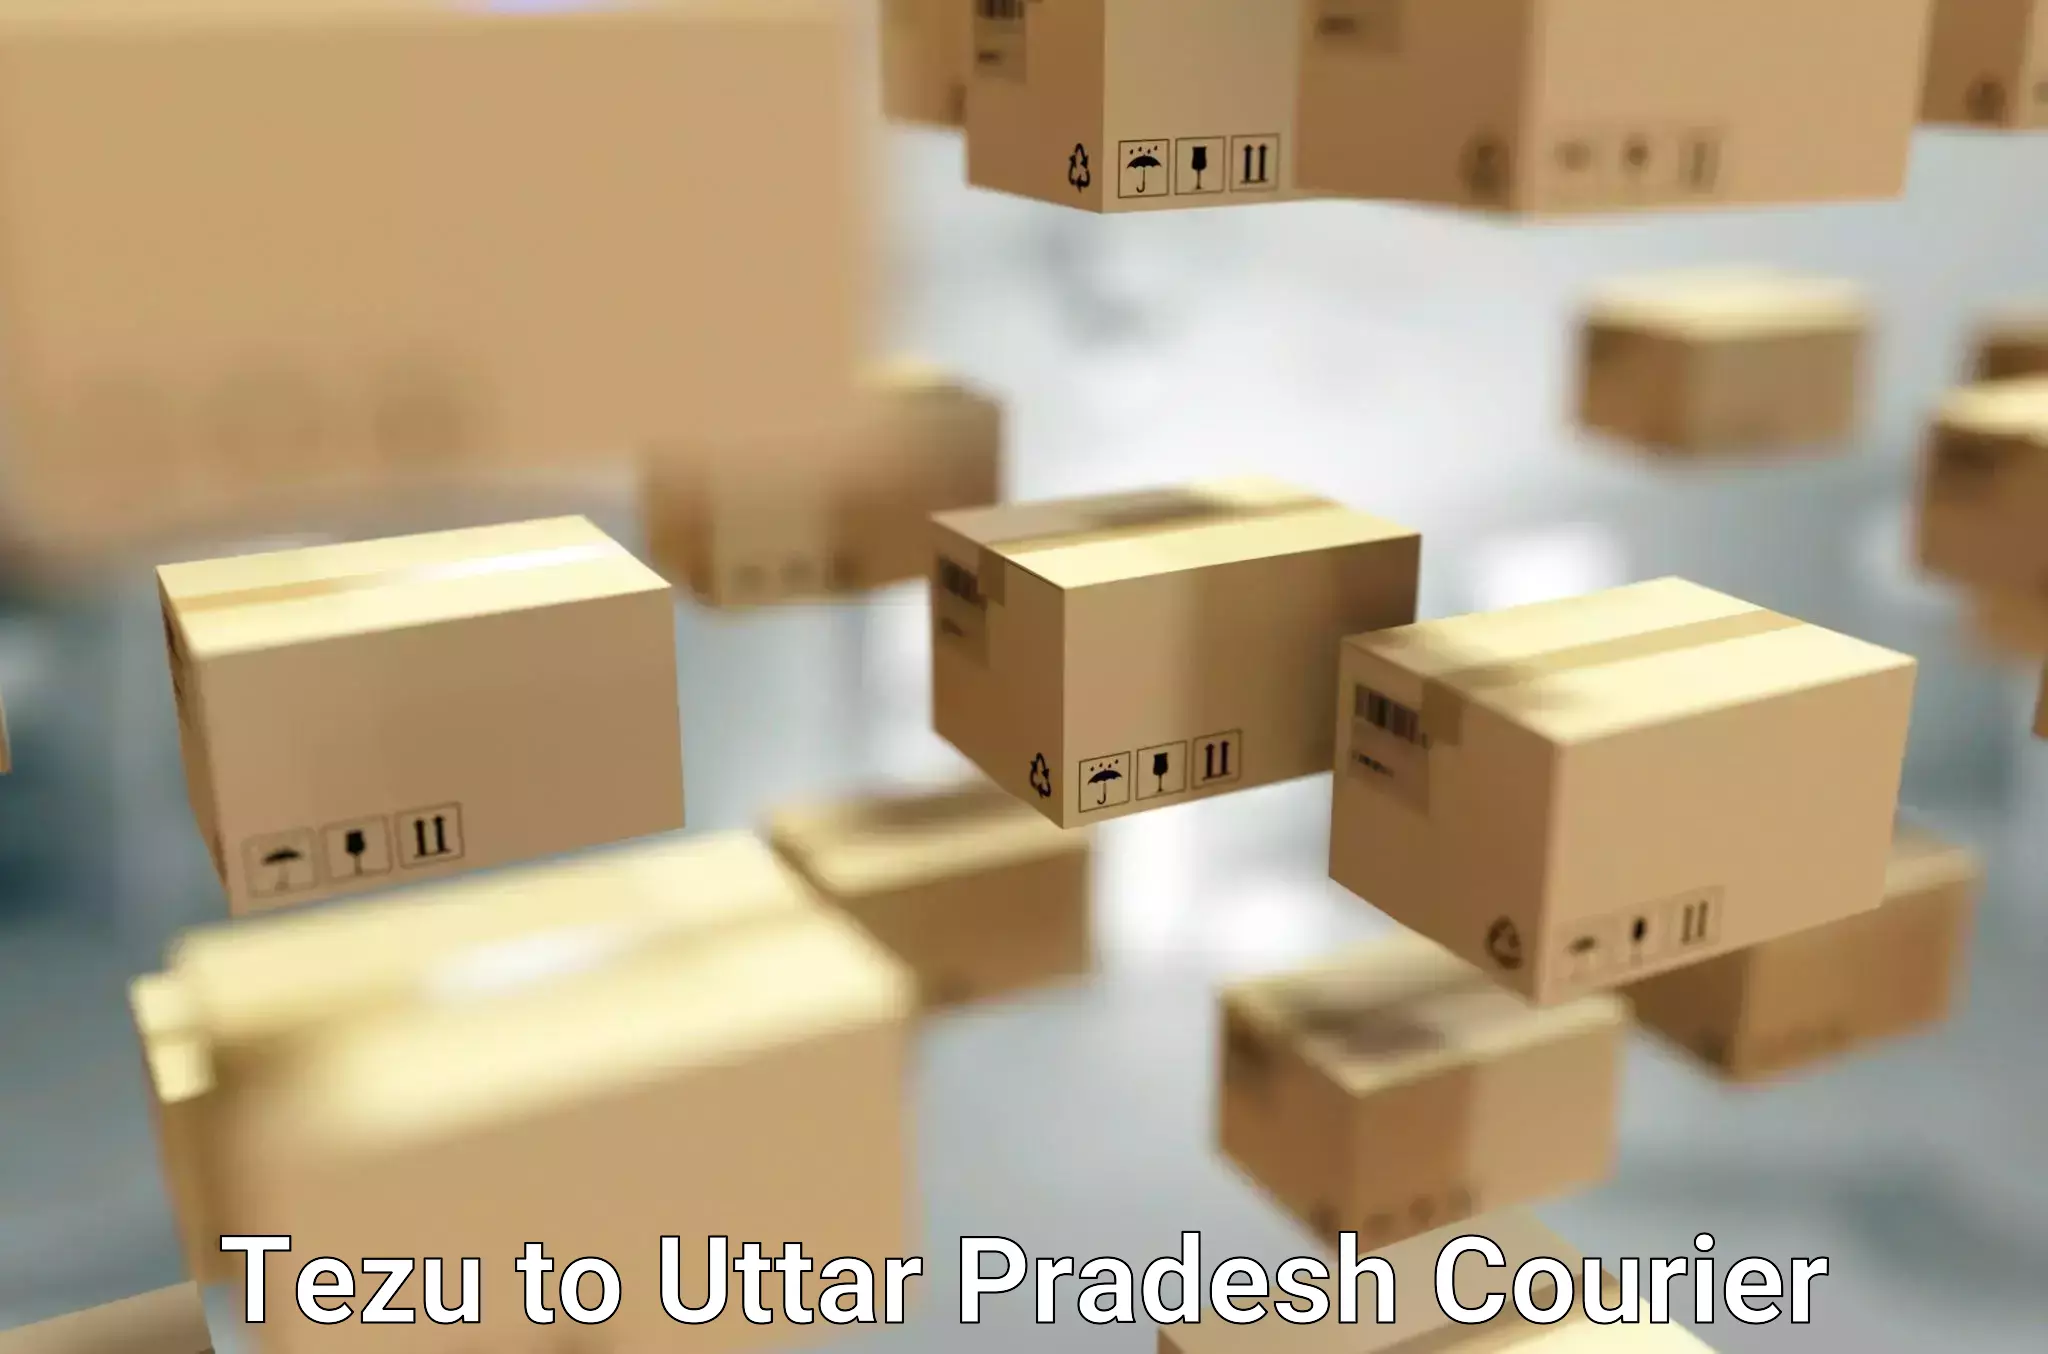 Professional moving company Tezu to Uttar Pradesh